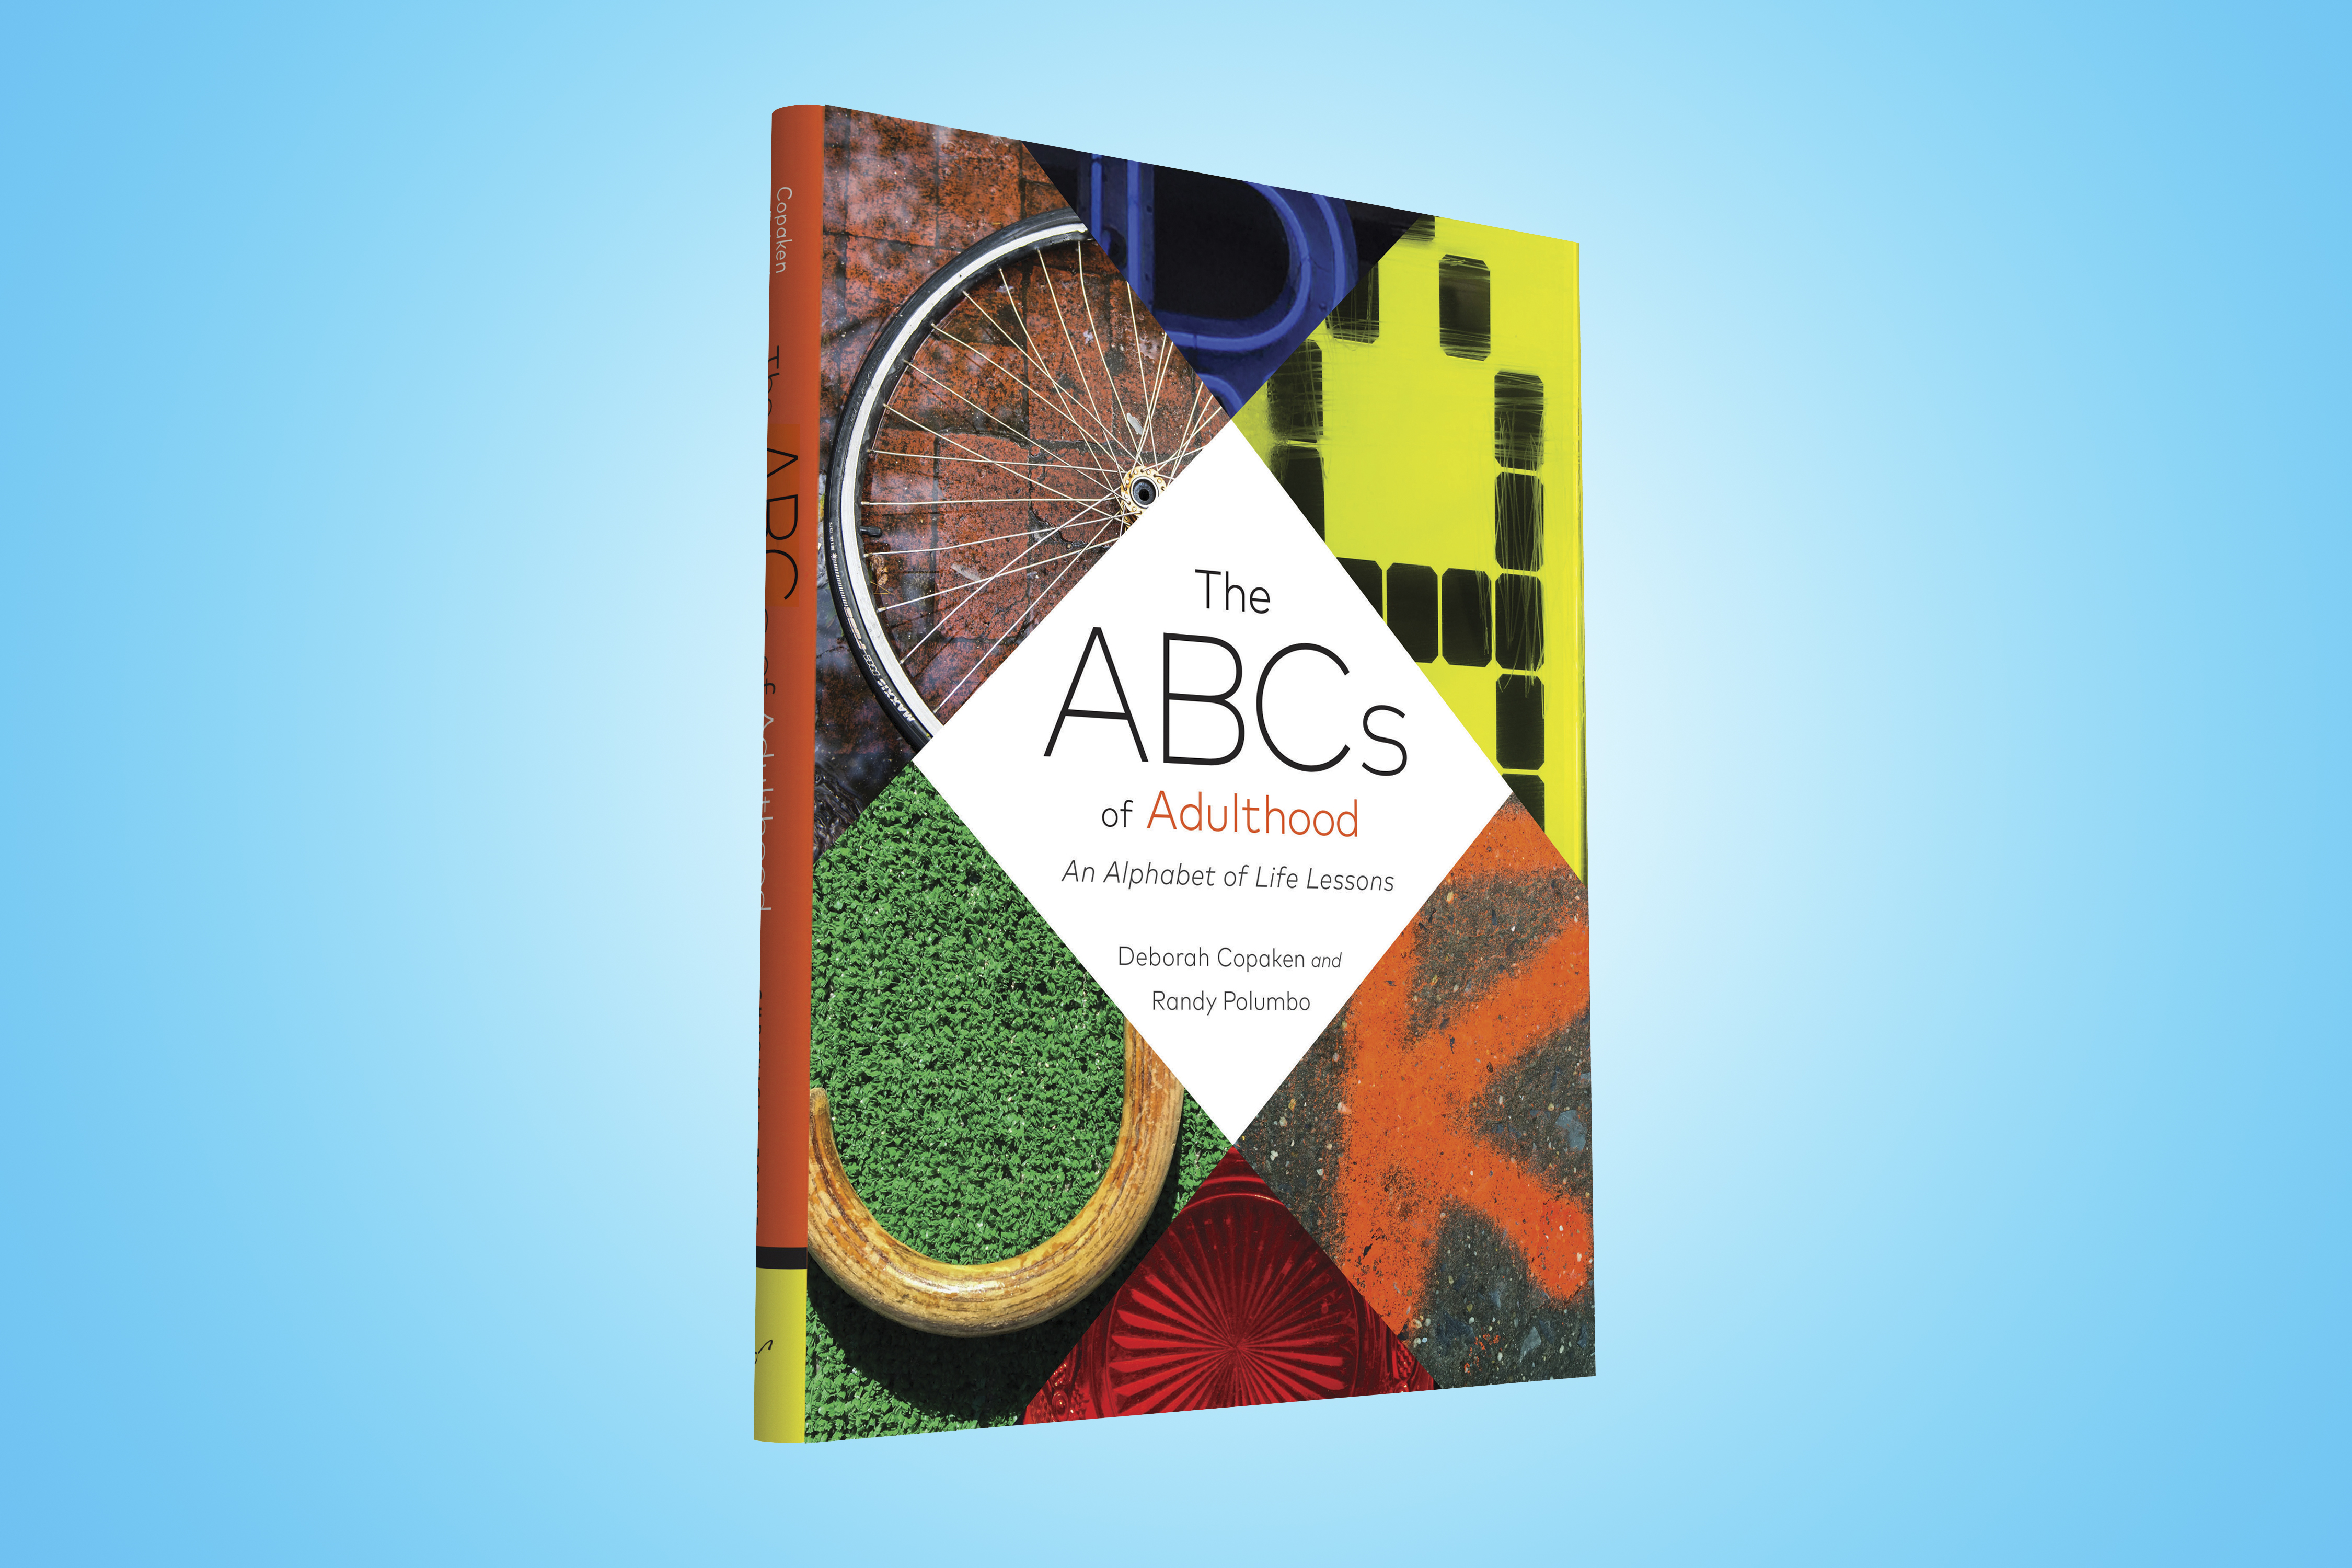 ABCs of Adulthood by Deborah Copaken, photographs by Randy Polumbo (Chronicle Books, 2016)